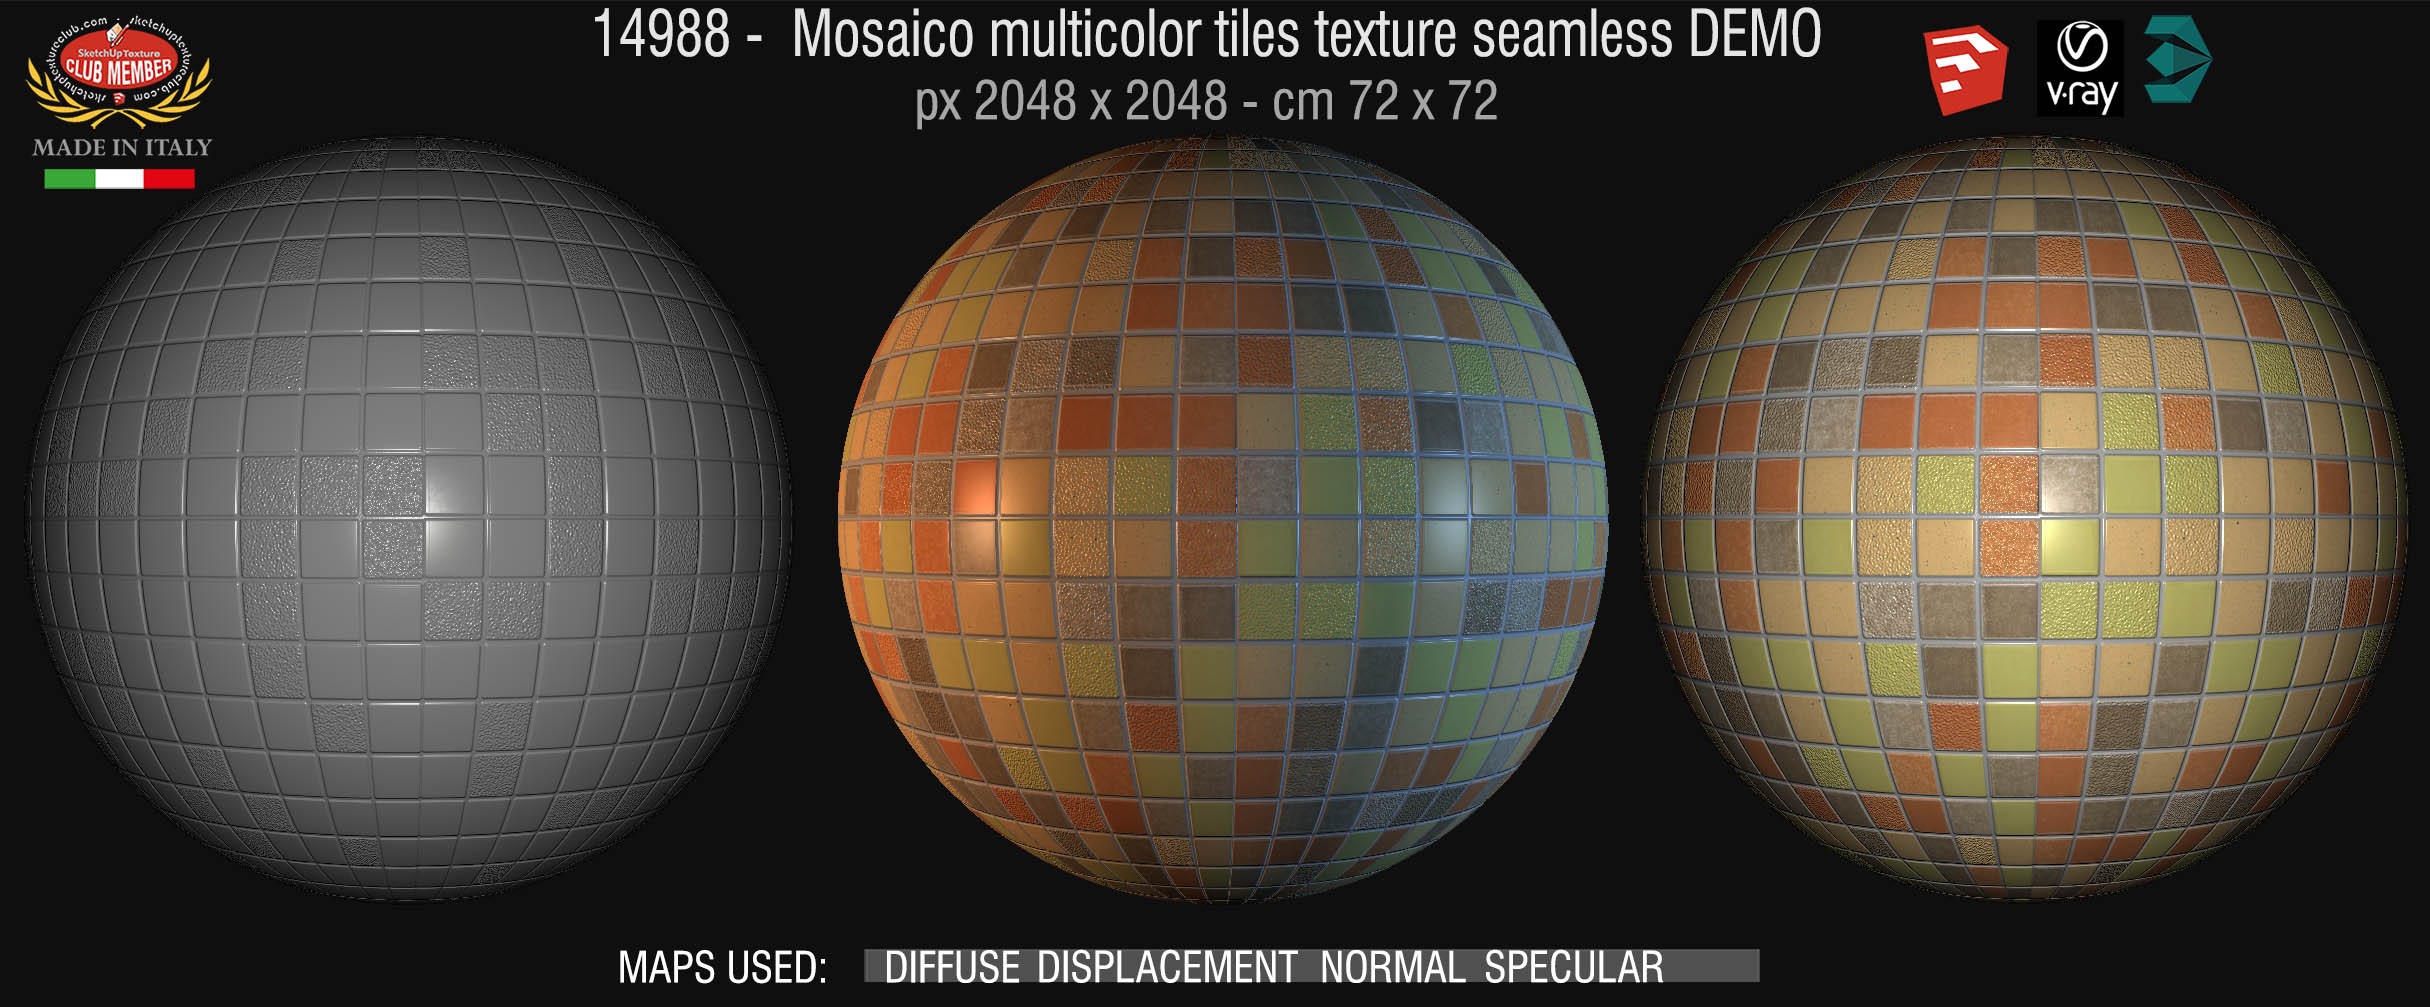 14988 Mosaico multicolor tiles texture seamless + maps DEMO